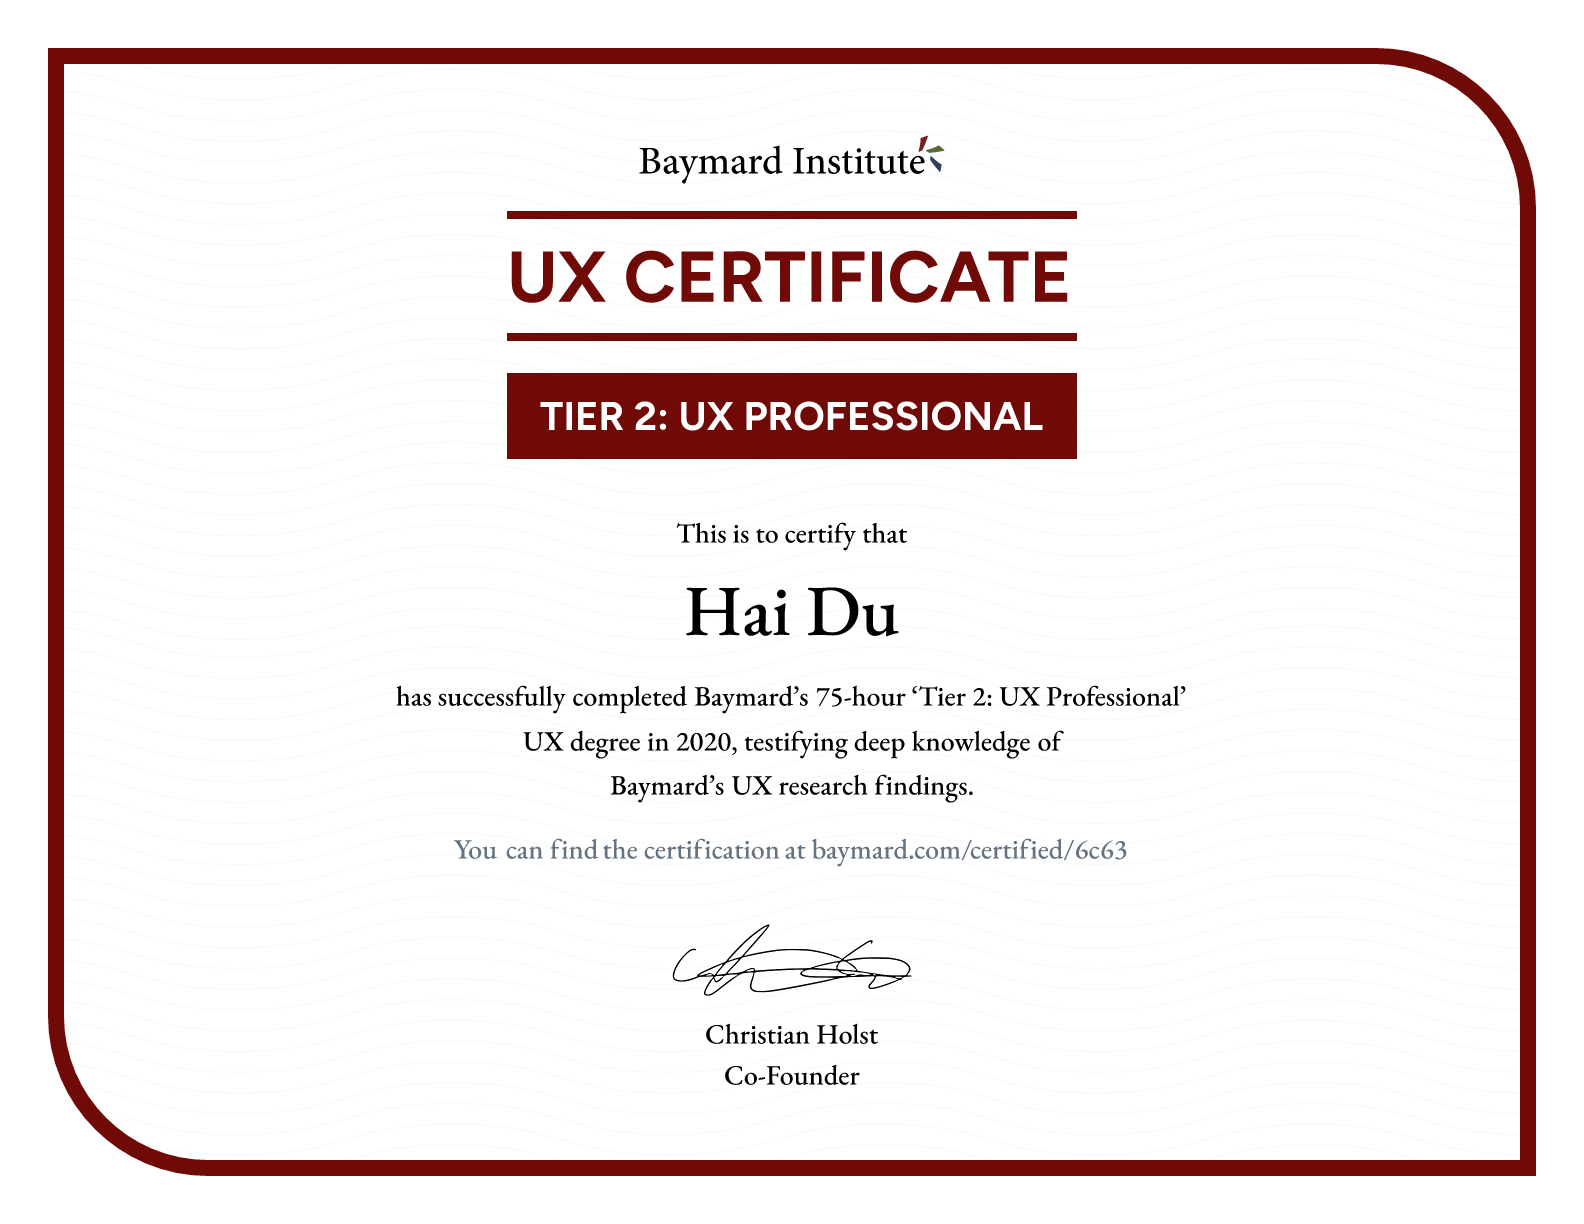 Hai Du’s certificate